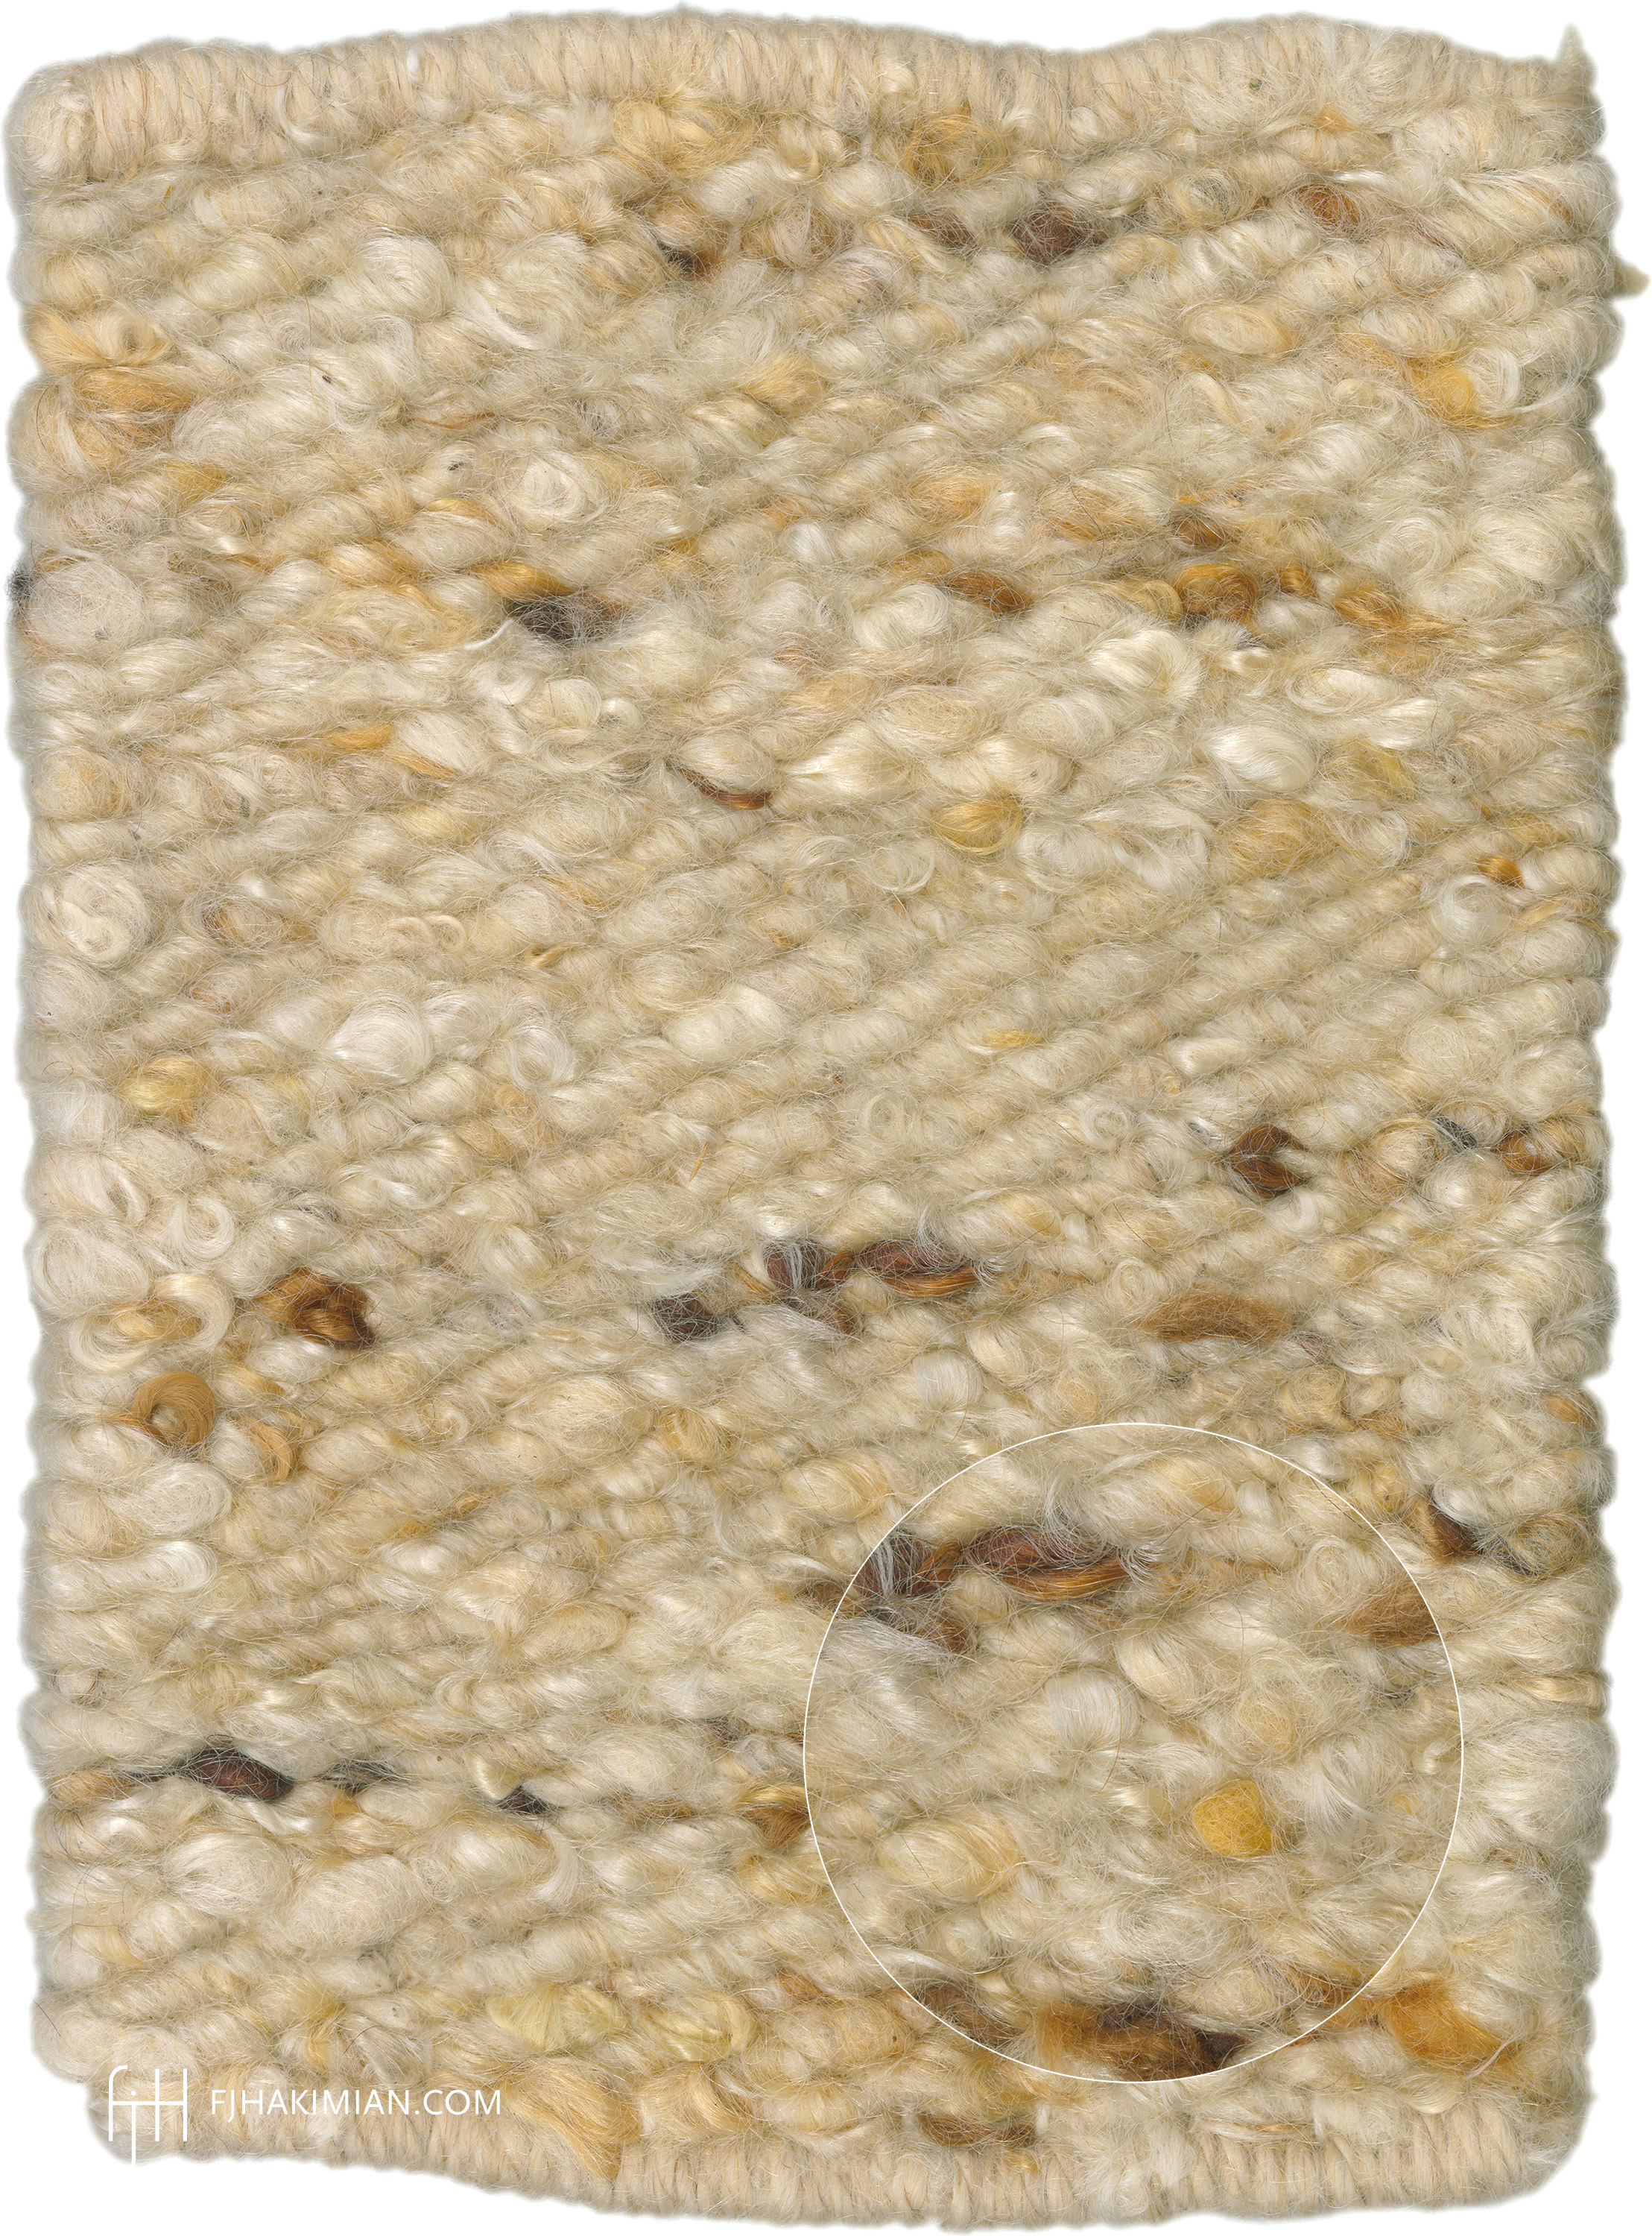 77802 | KL Marbled Tabby Design | Custom Mohair Carpet | FJ Hakimian | Carpet Gallery in NYC